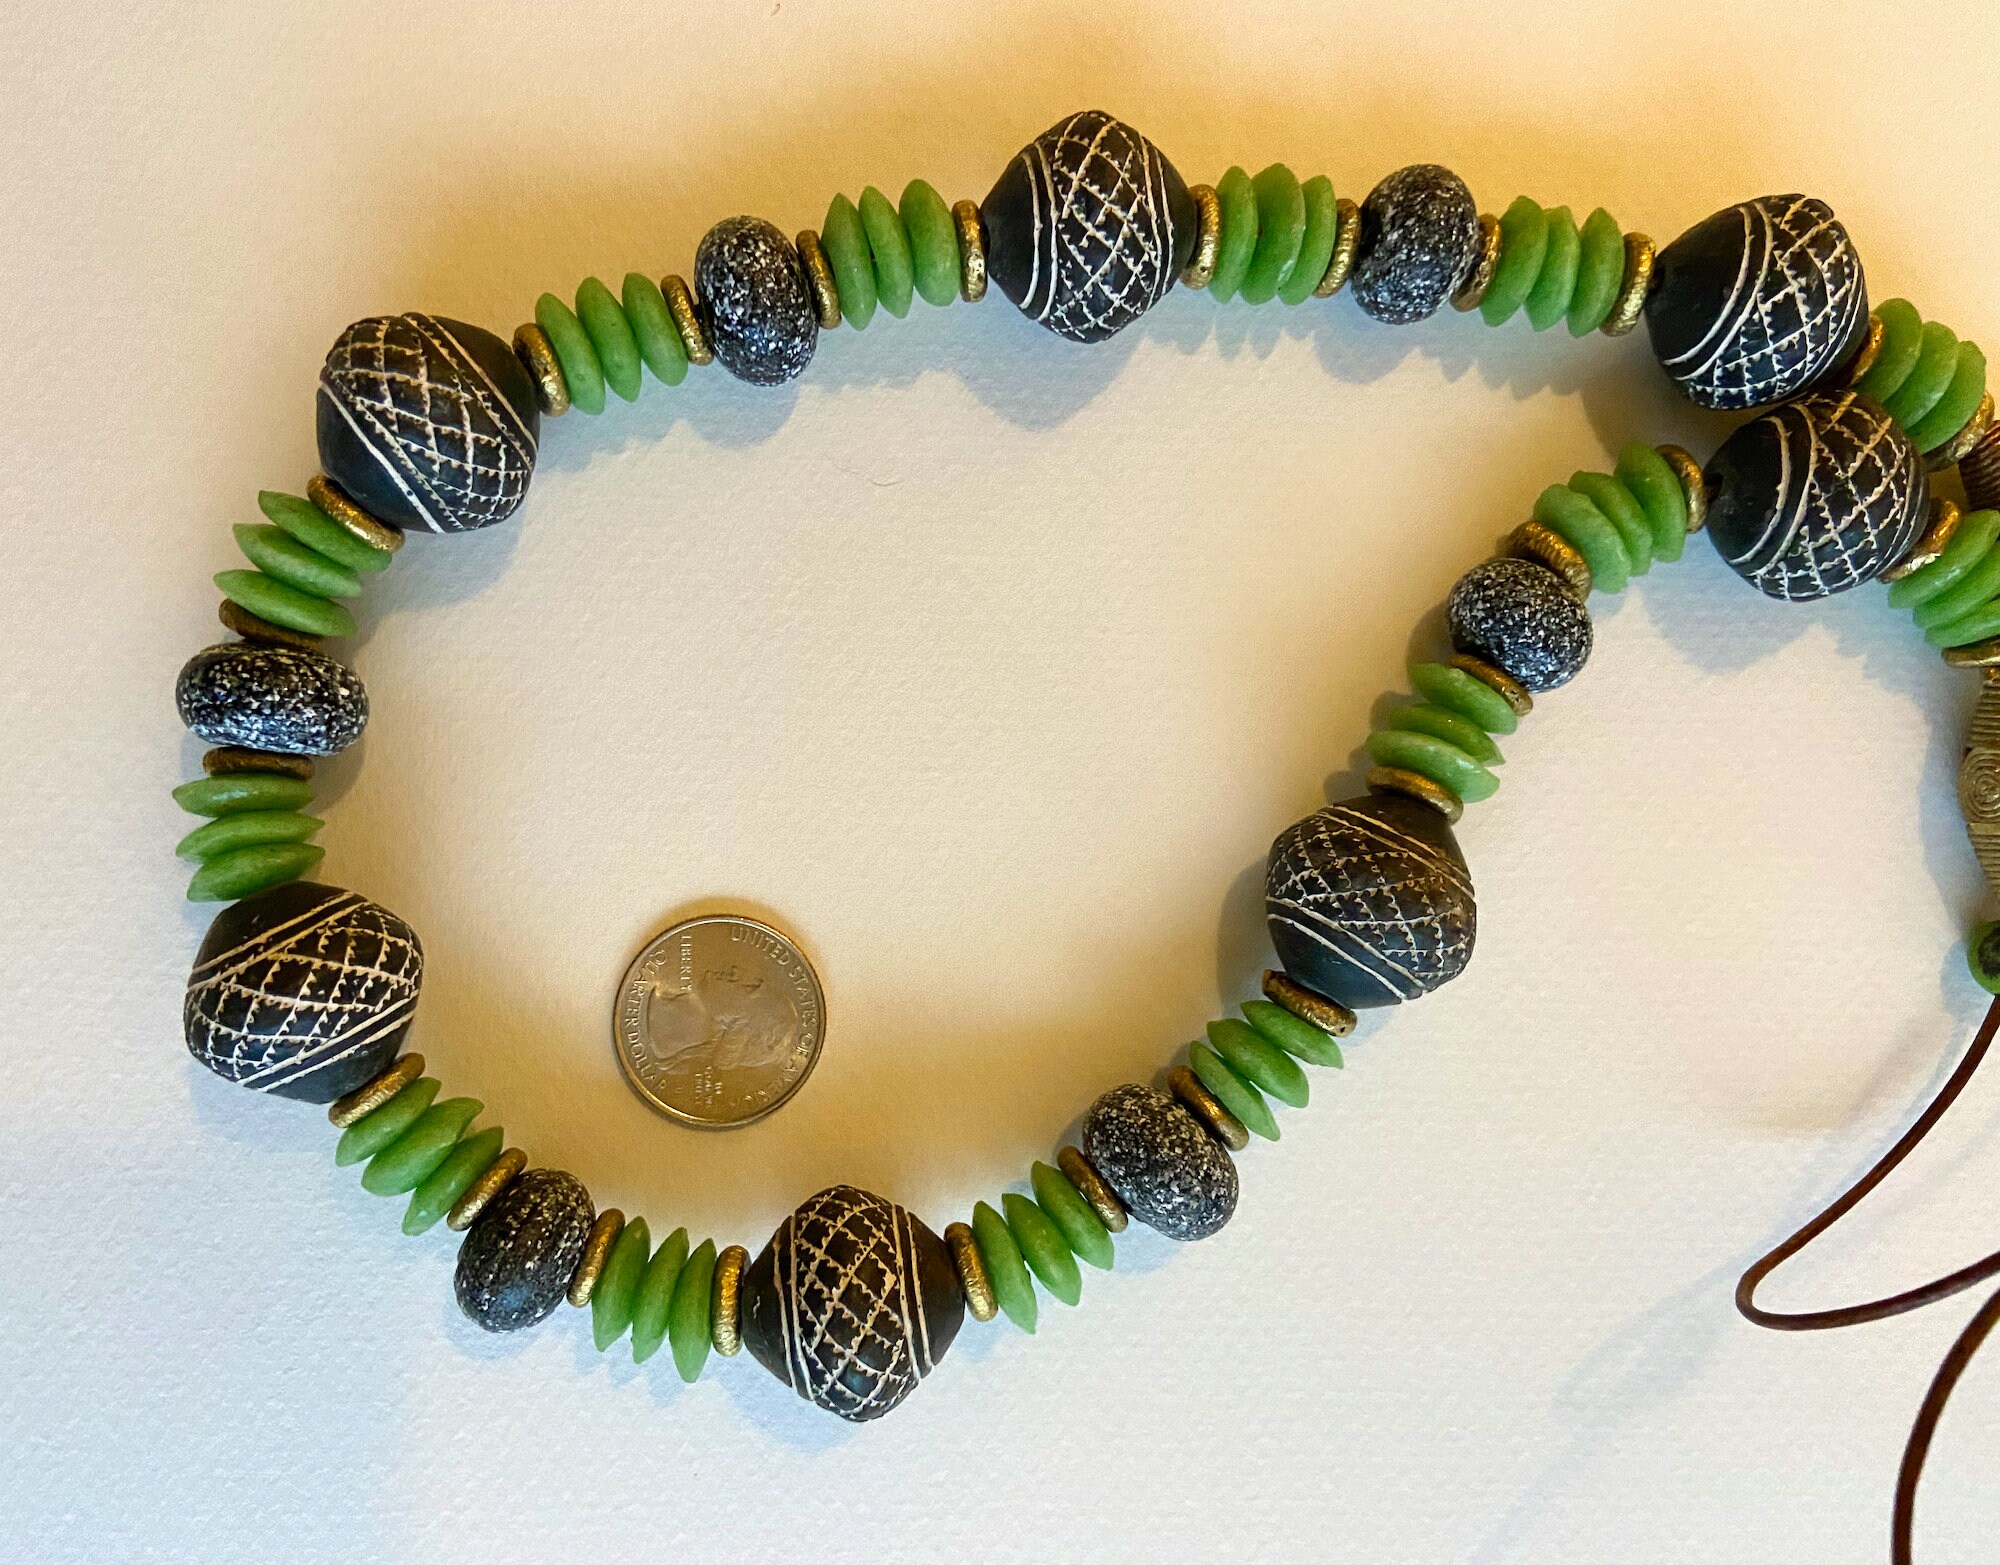 Full String, 50 African Black Clay Beads Handmade in Mali, 15-16  Mm.diameter X 15-16 Mm. 